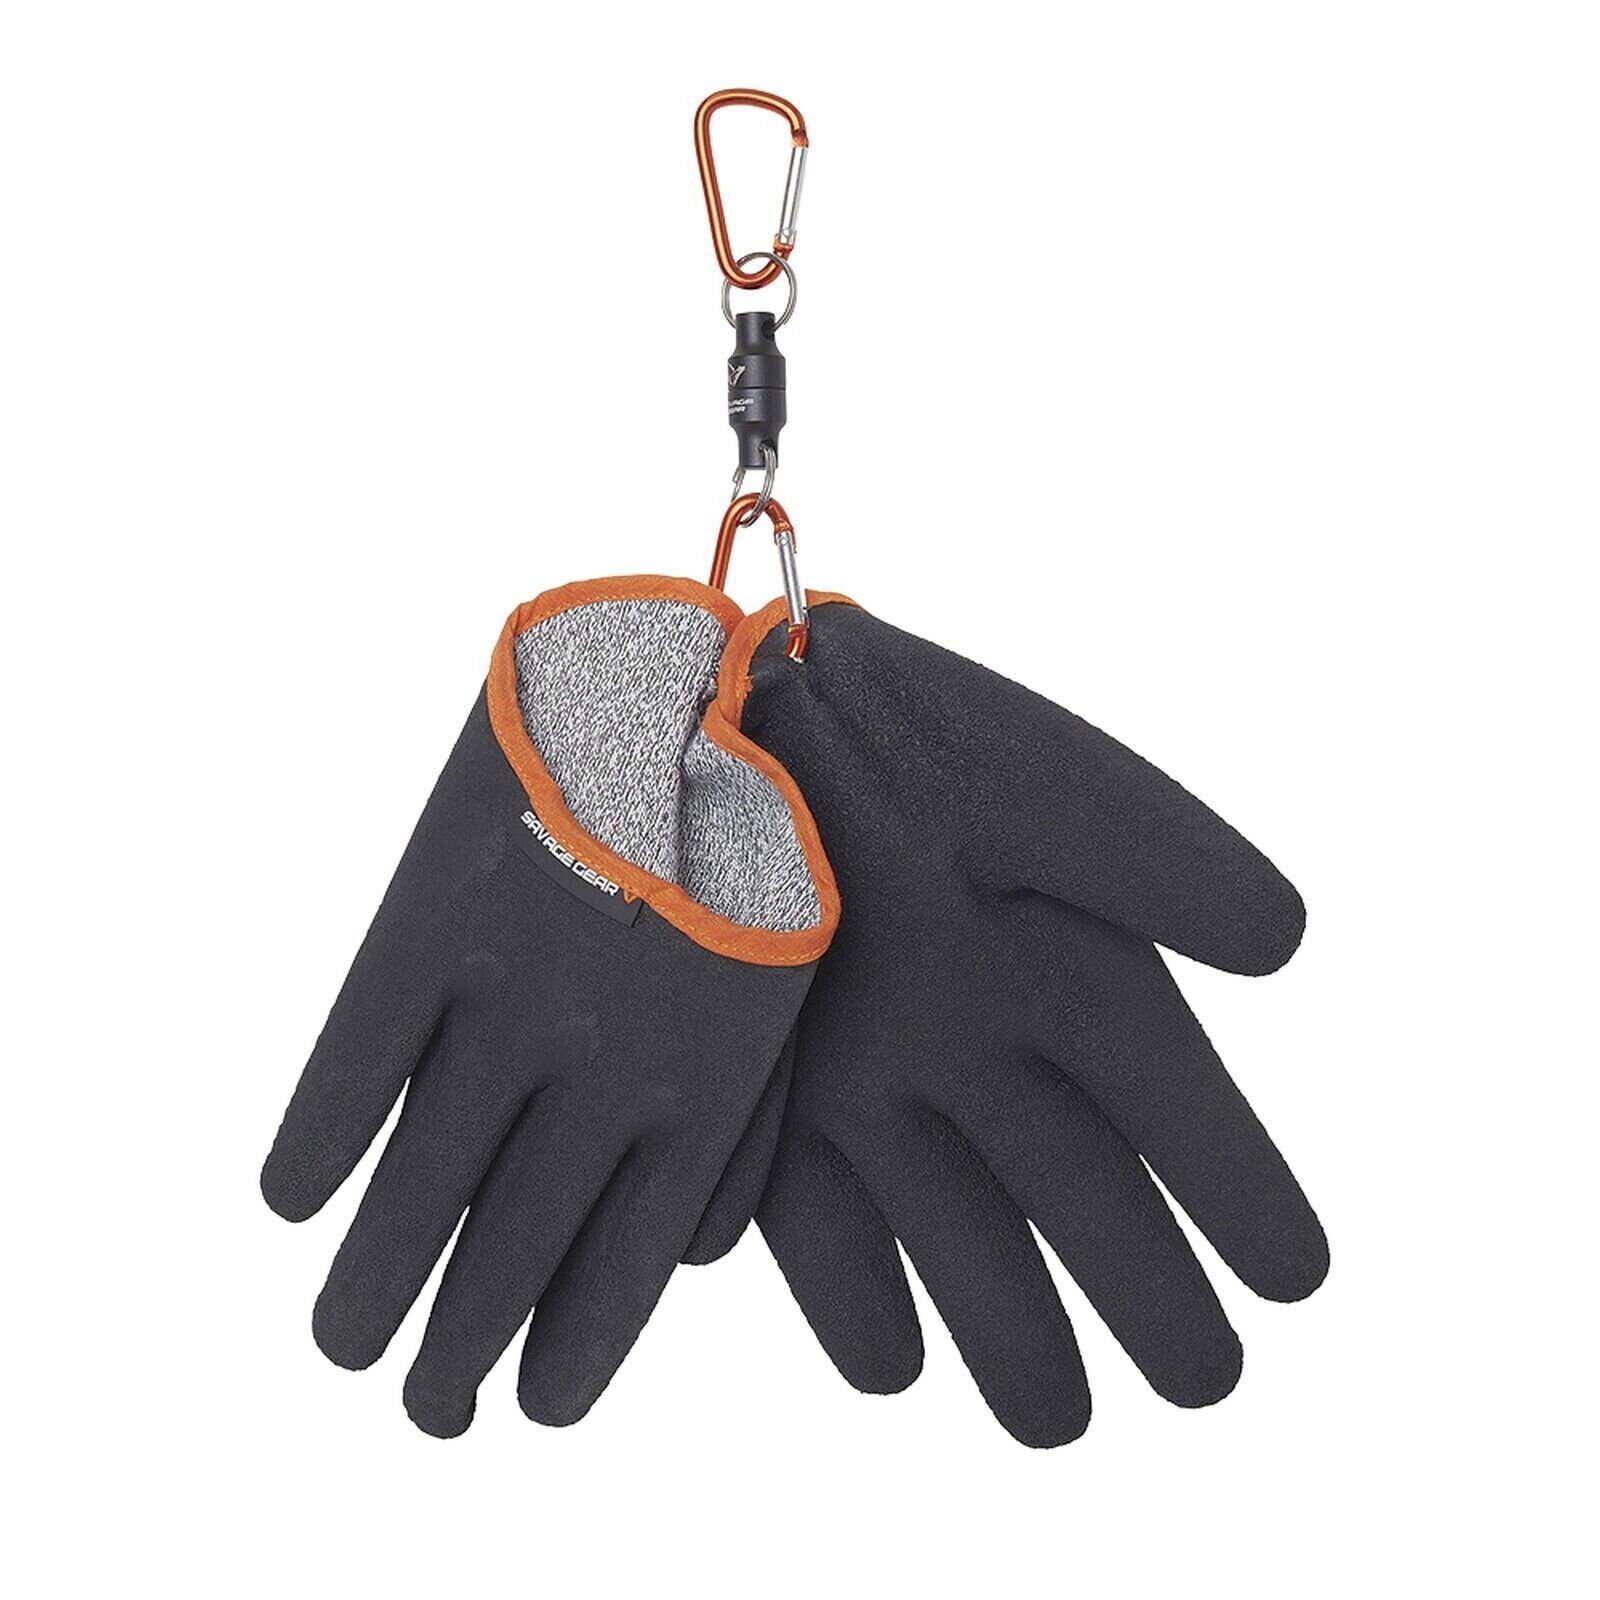 Savage Gear Angelhandschuhe Aqua Guard Gloves Black M, L, XL wasserdichter Angler Landehandschuh